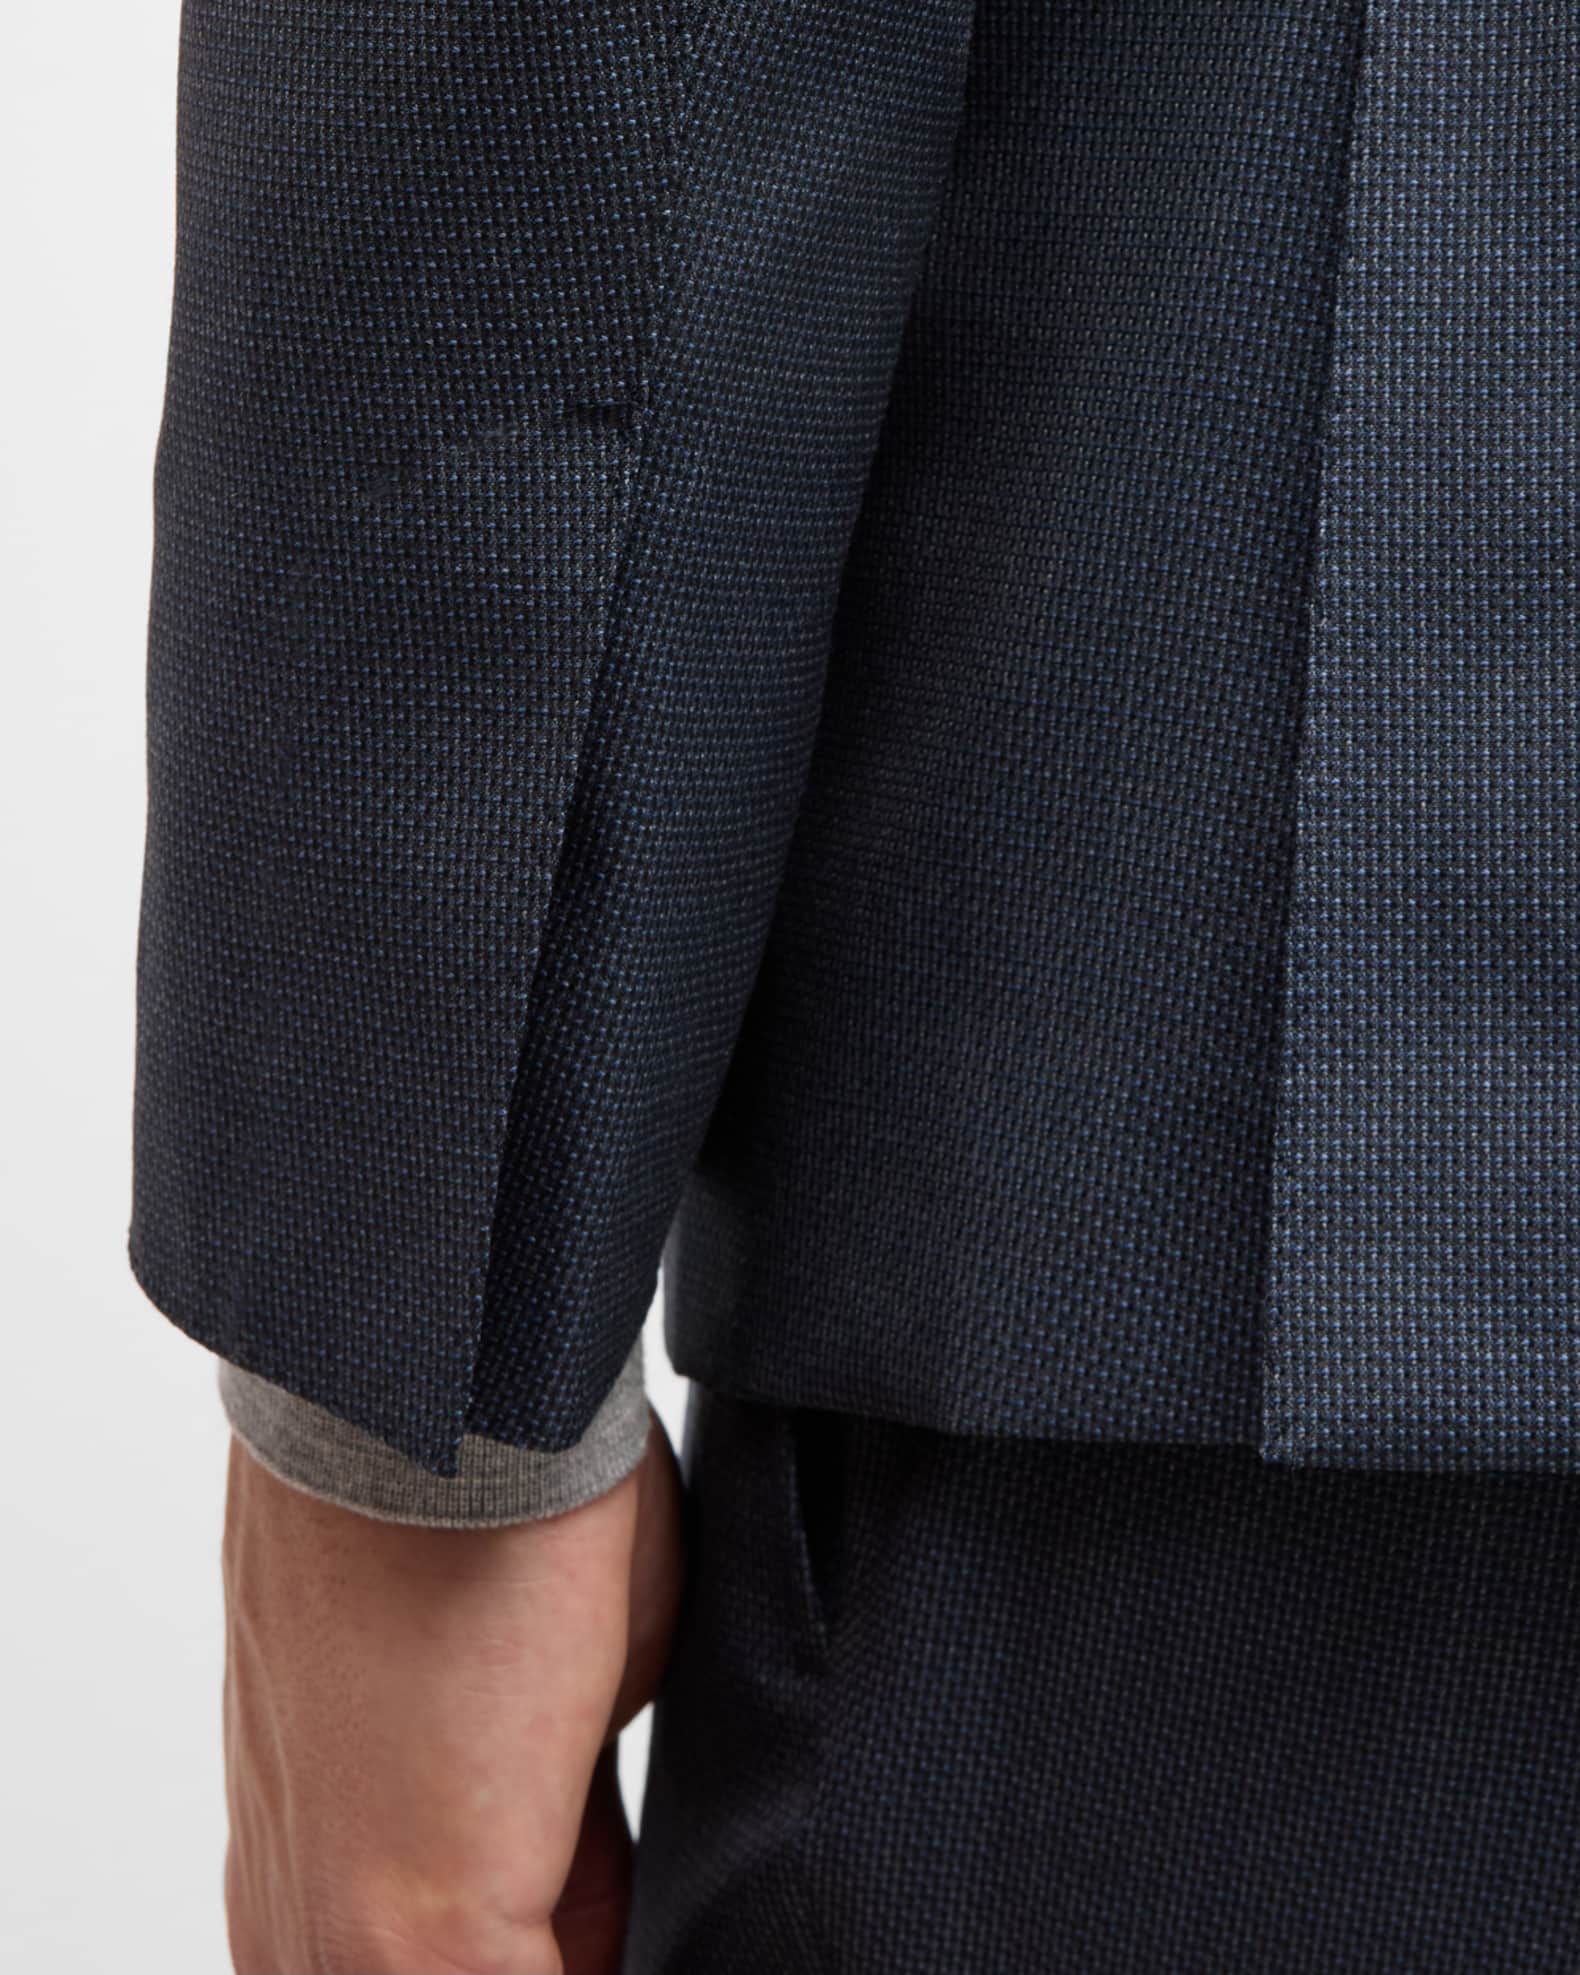 TOM FORD Men's Shelton Micro-Hopsack Suit | Neiman Marcus